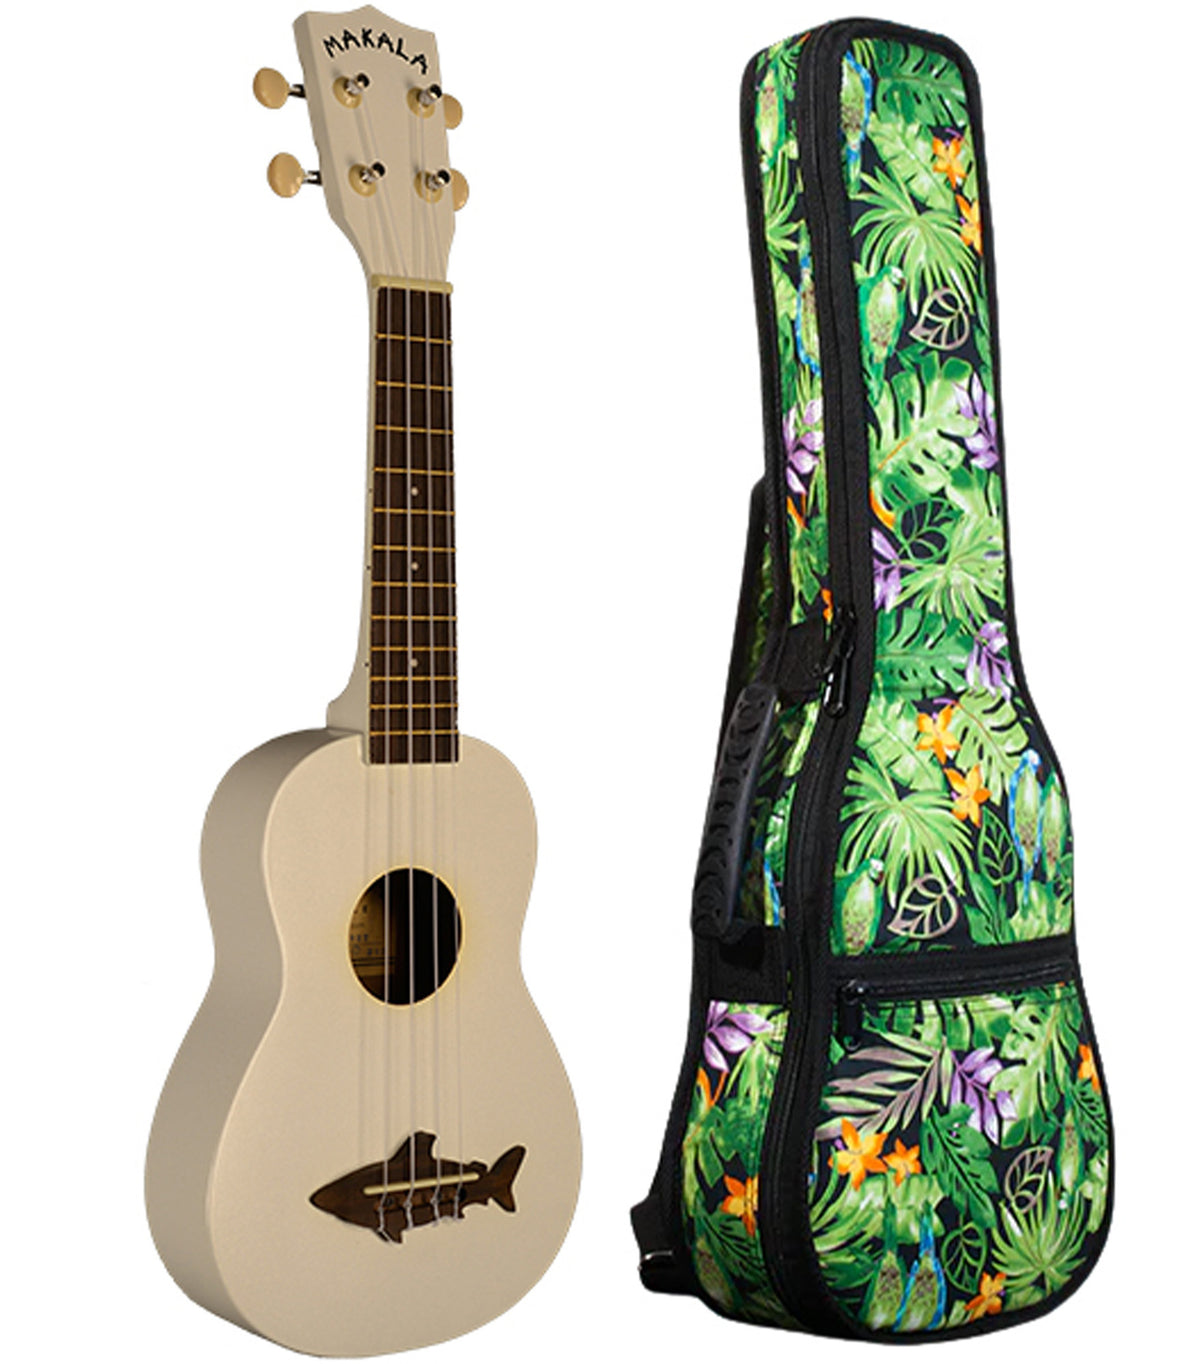 MK-SS/WHT White Soprano Shark Ukulele Includes Gigbag Floral Print, Padded with Backpack Straps